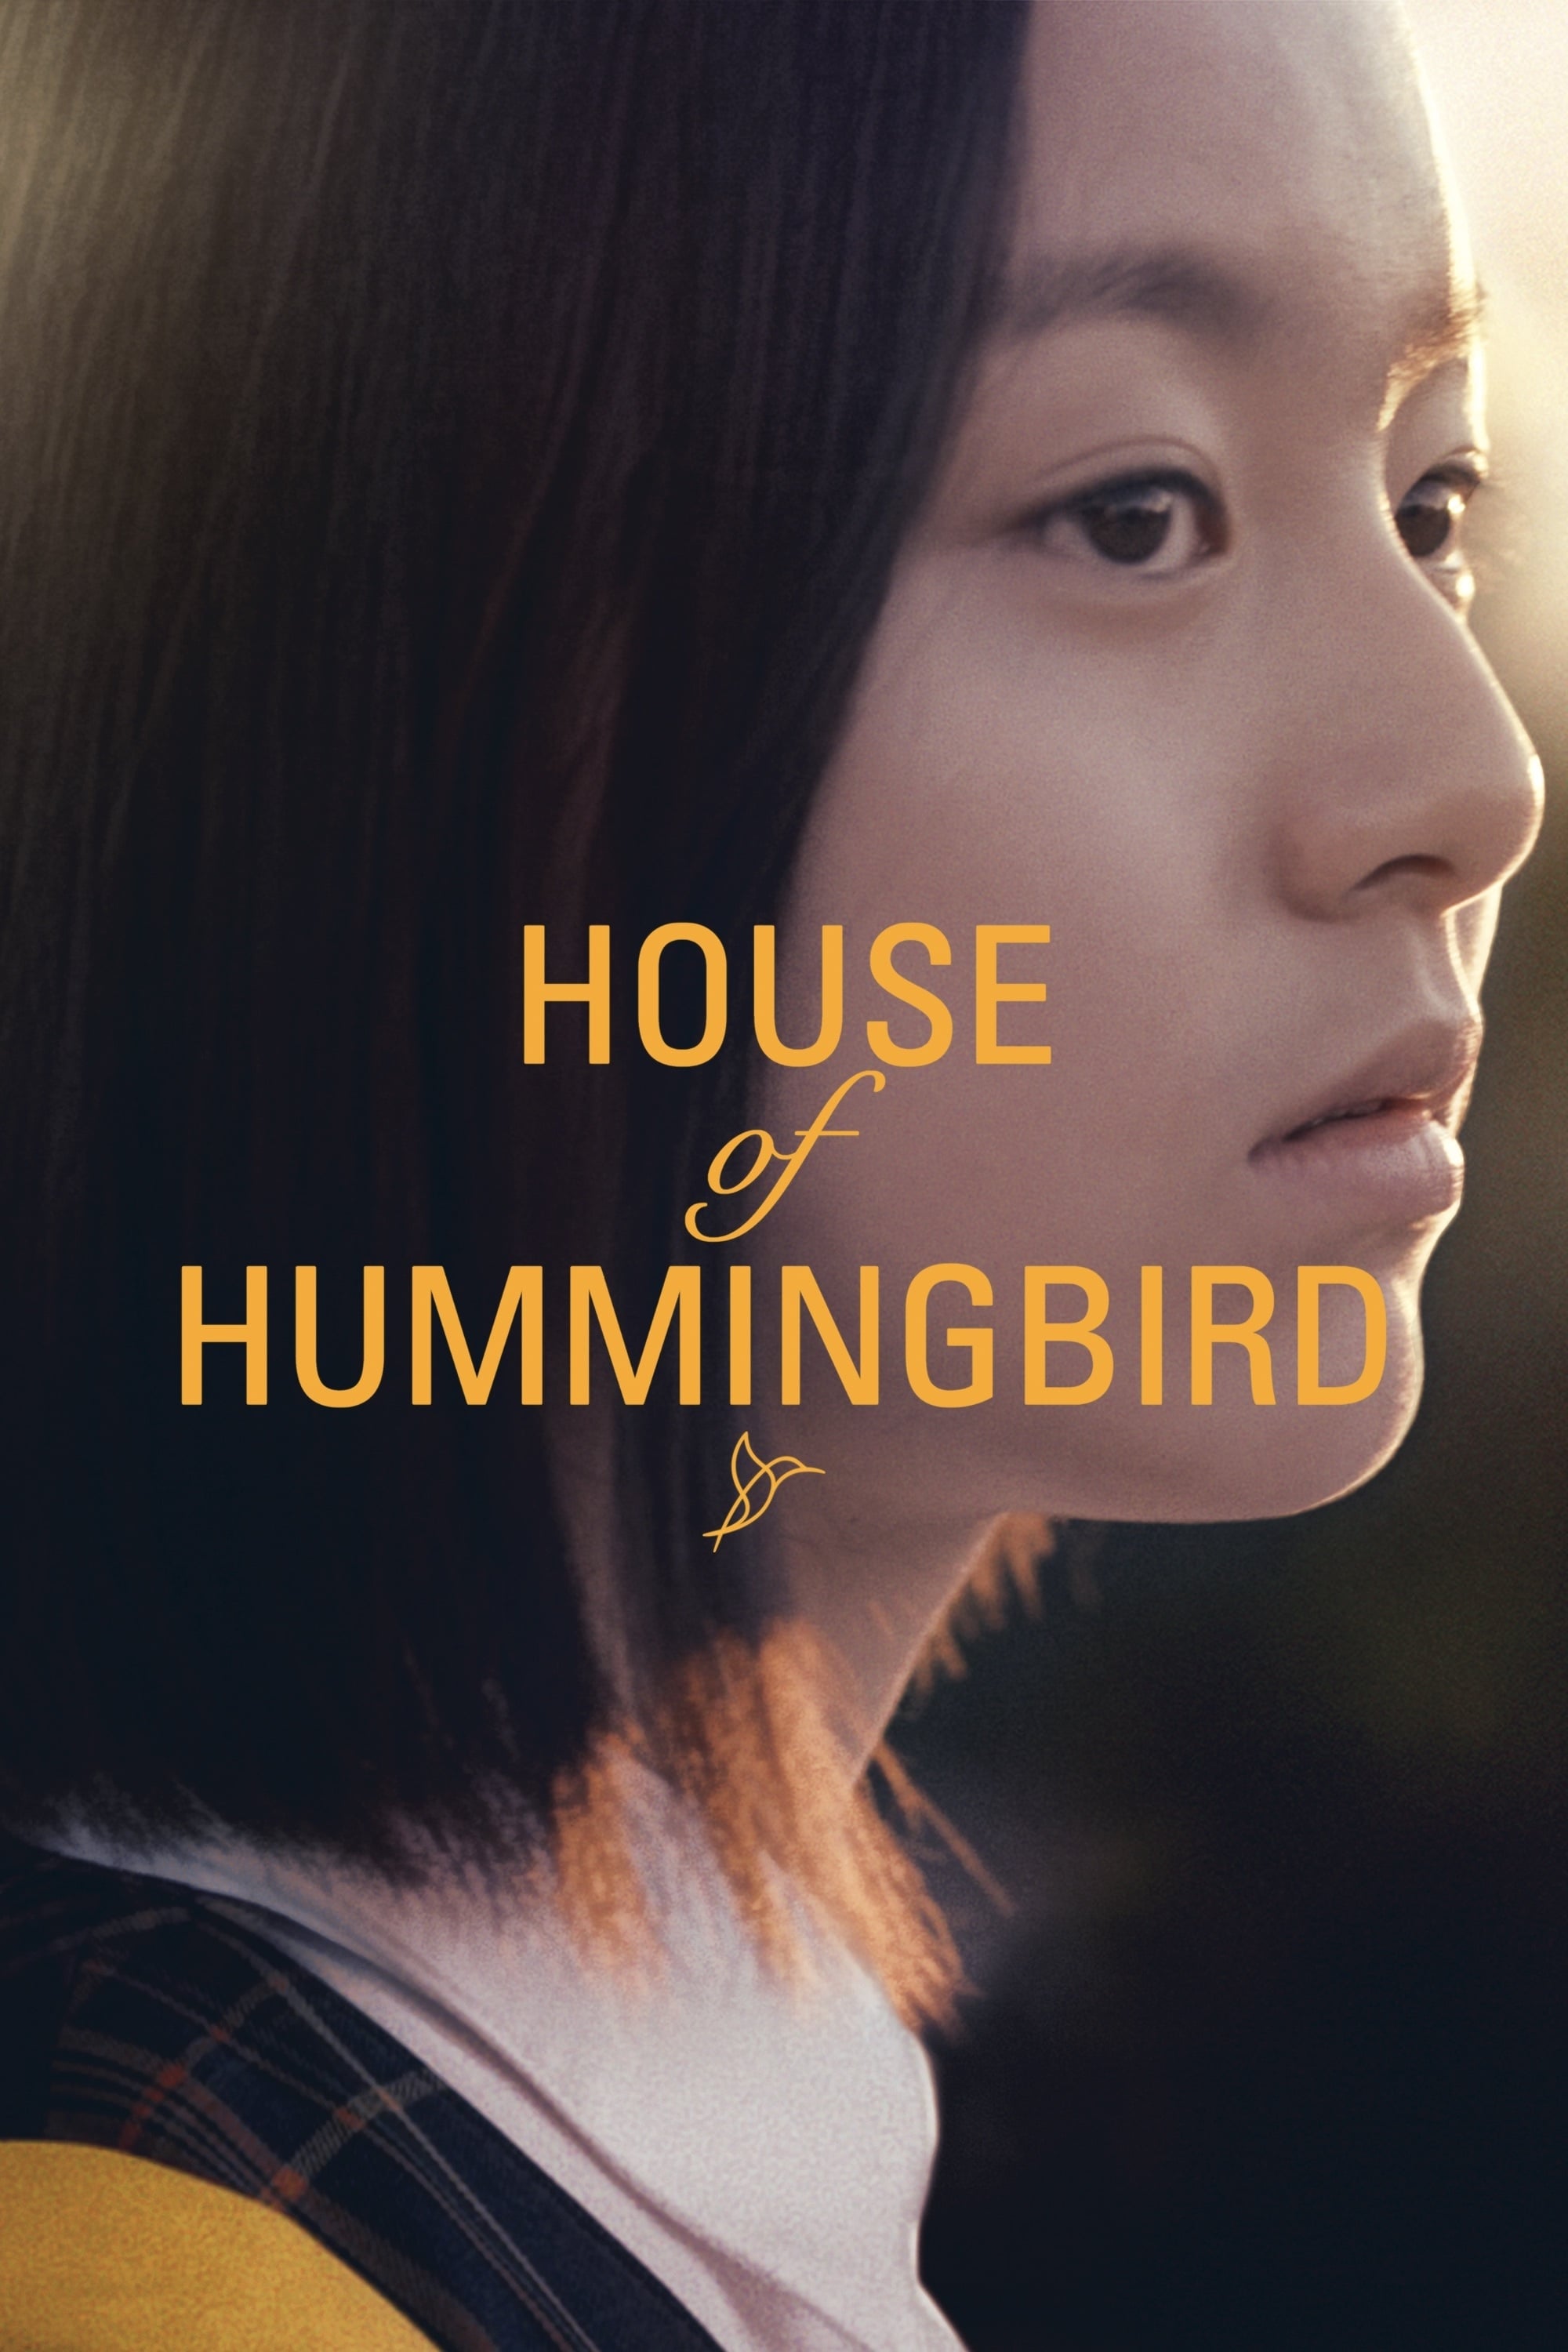 House of Hummingbird (2019)